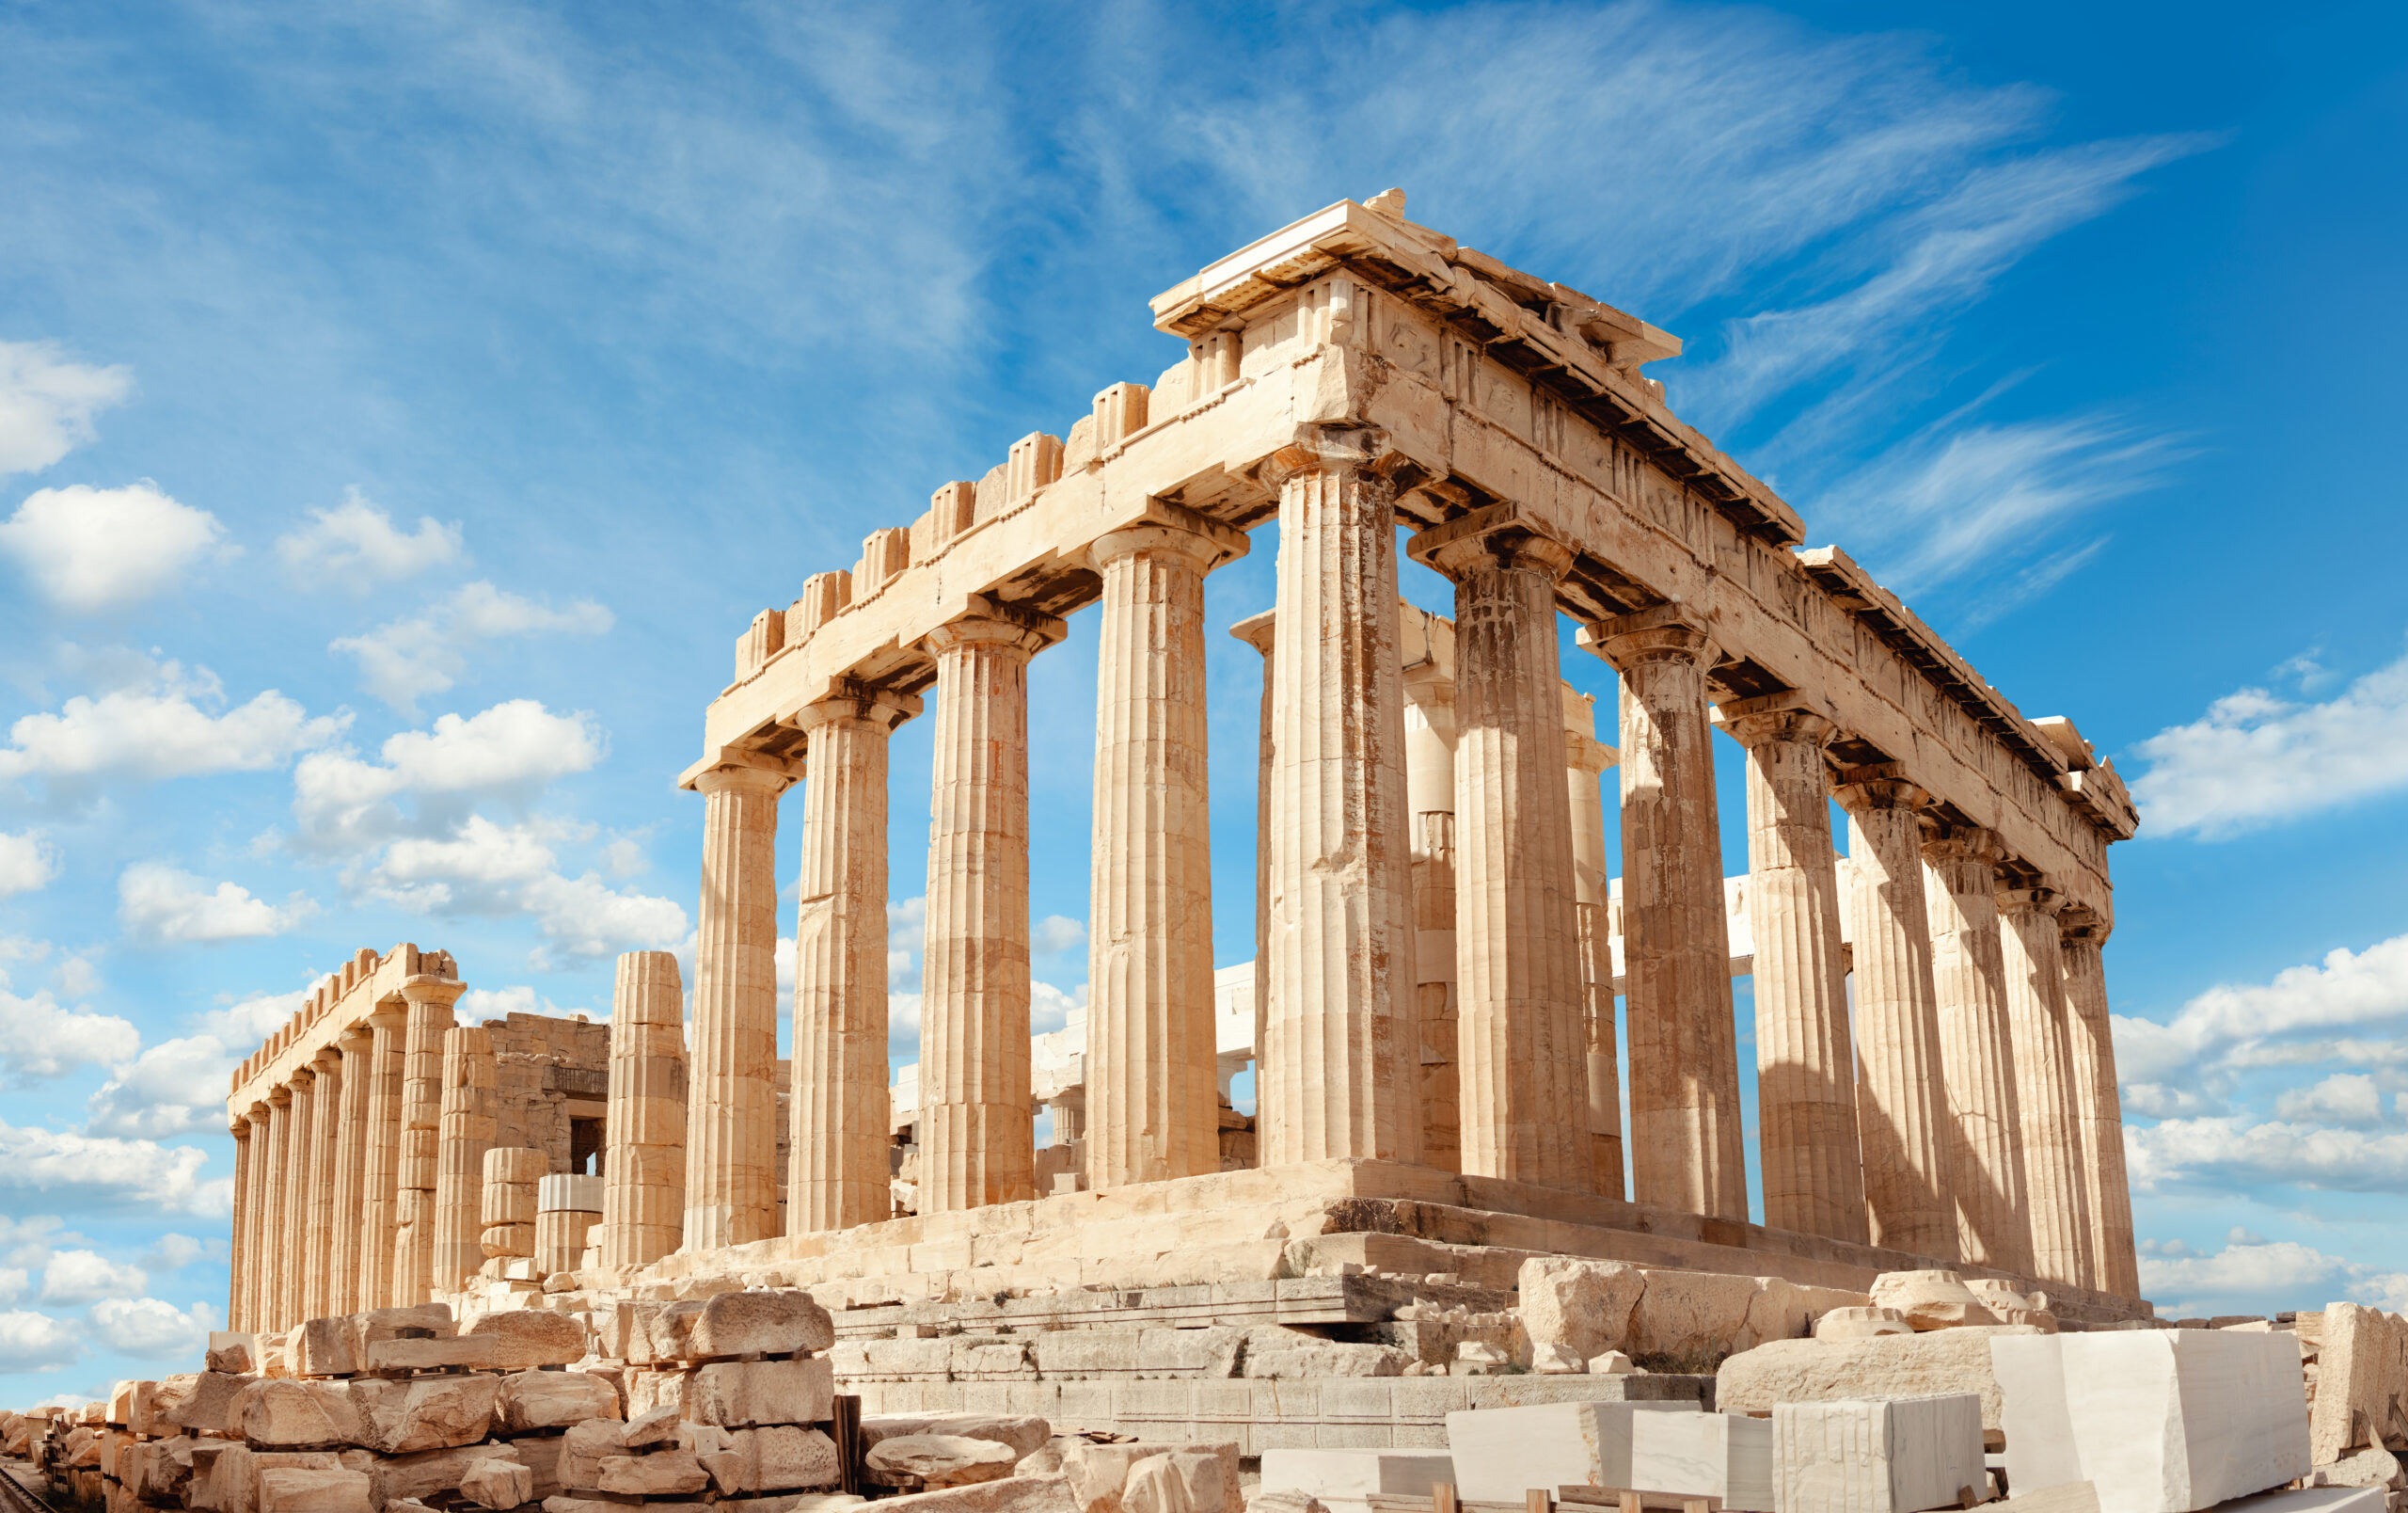 Greece Trip – In the Steps of Paul